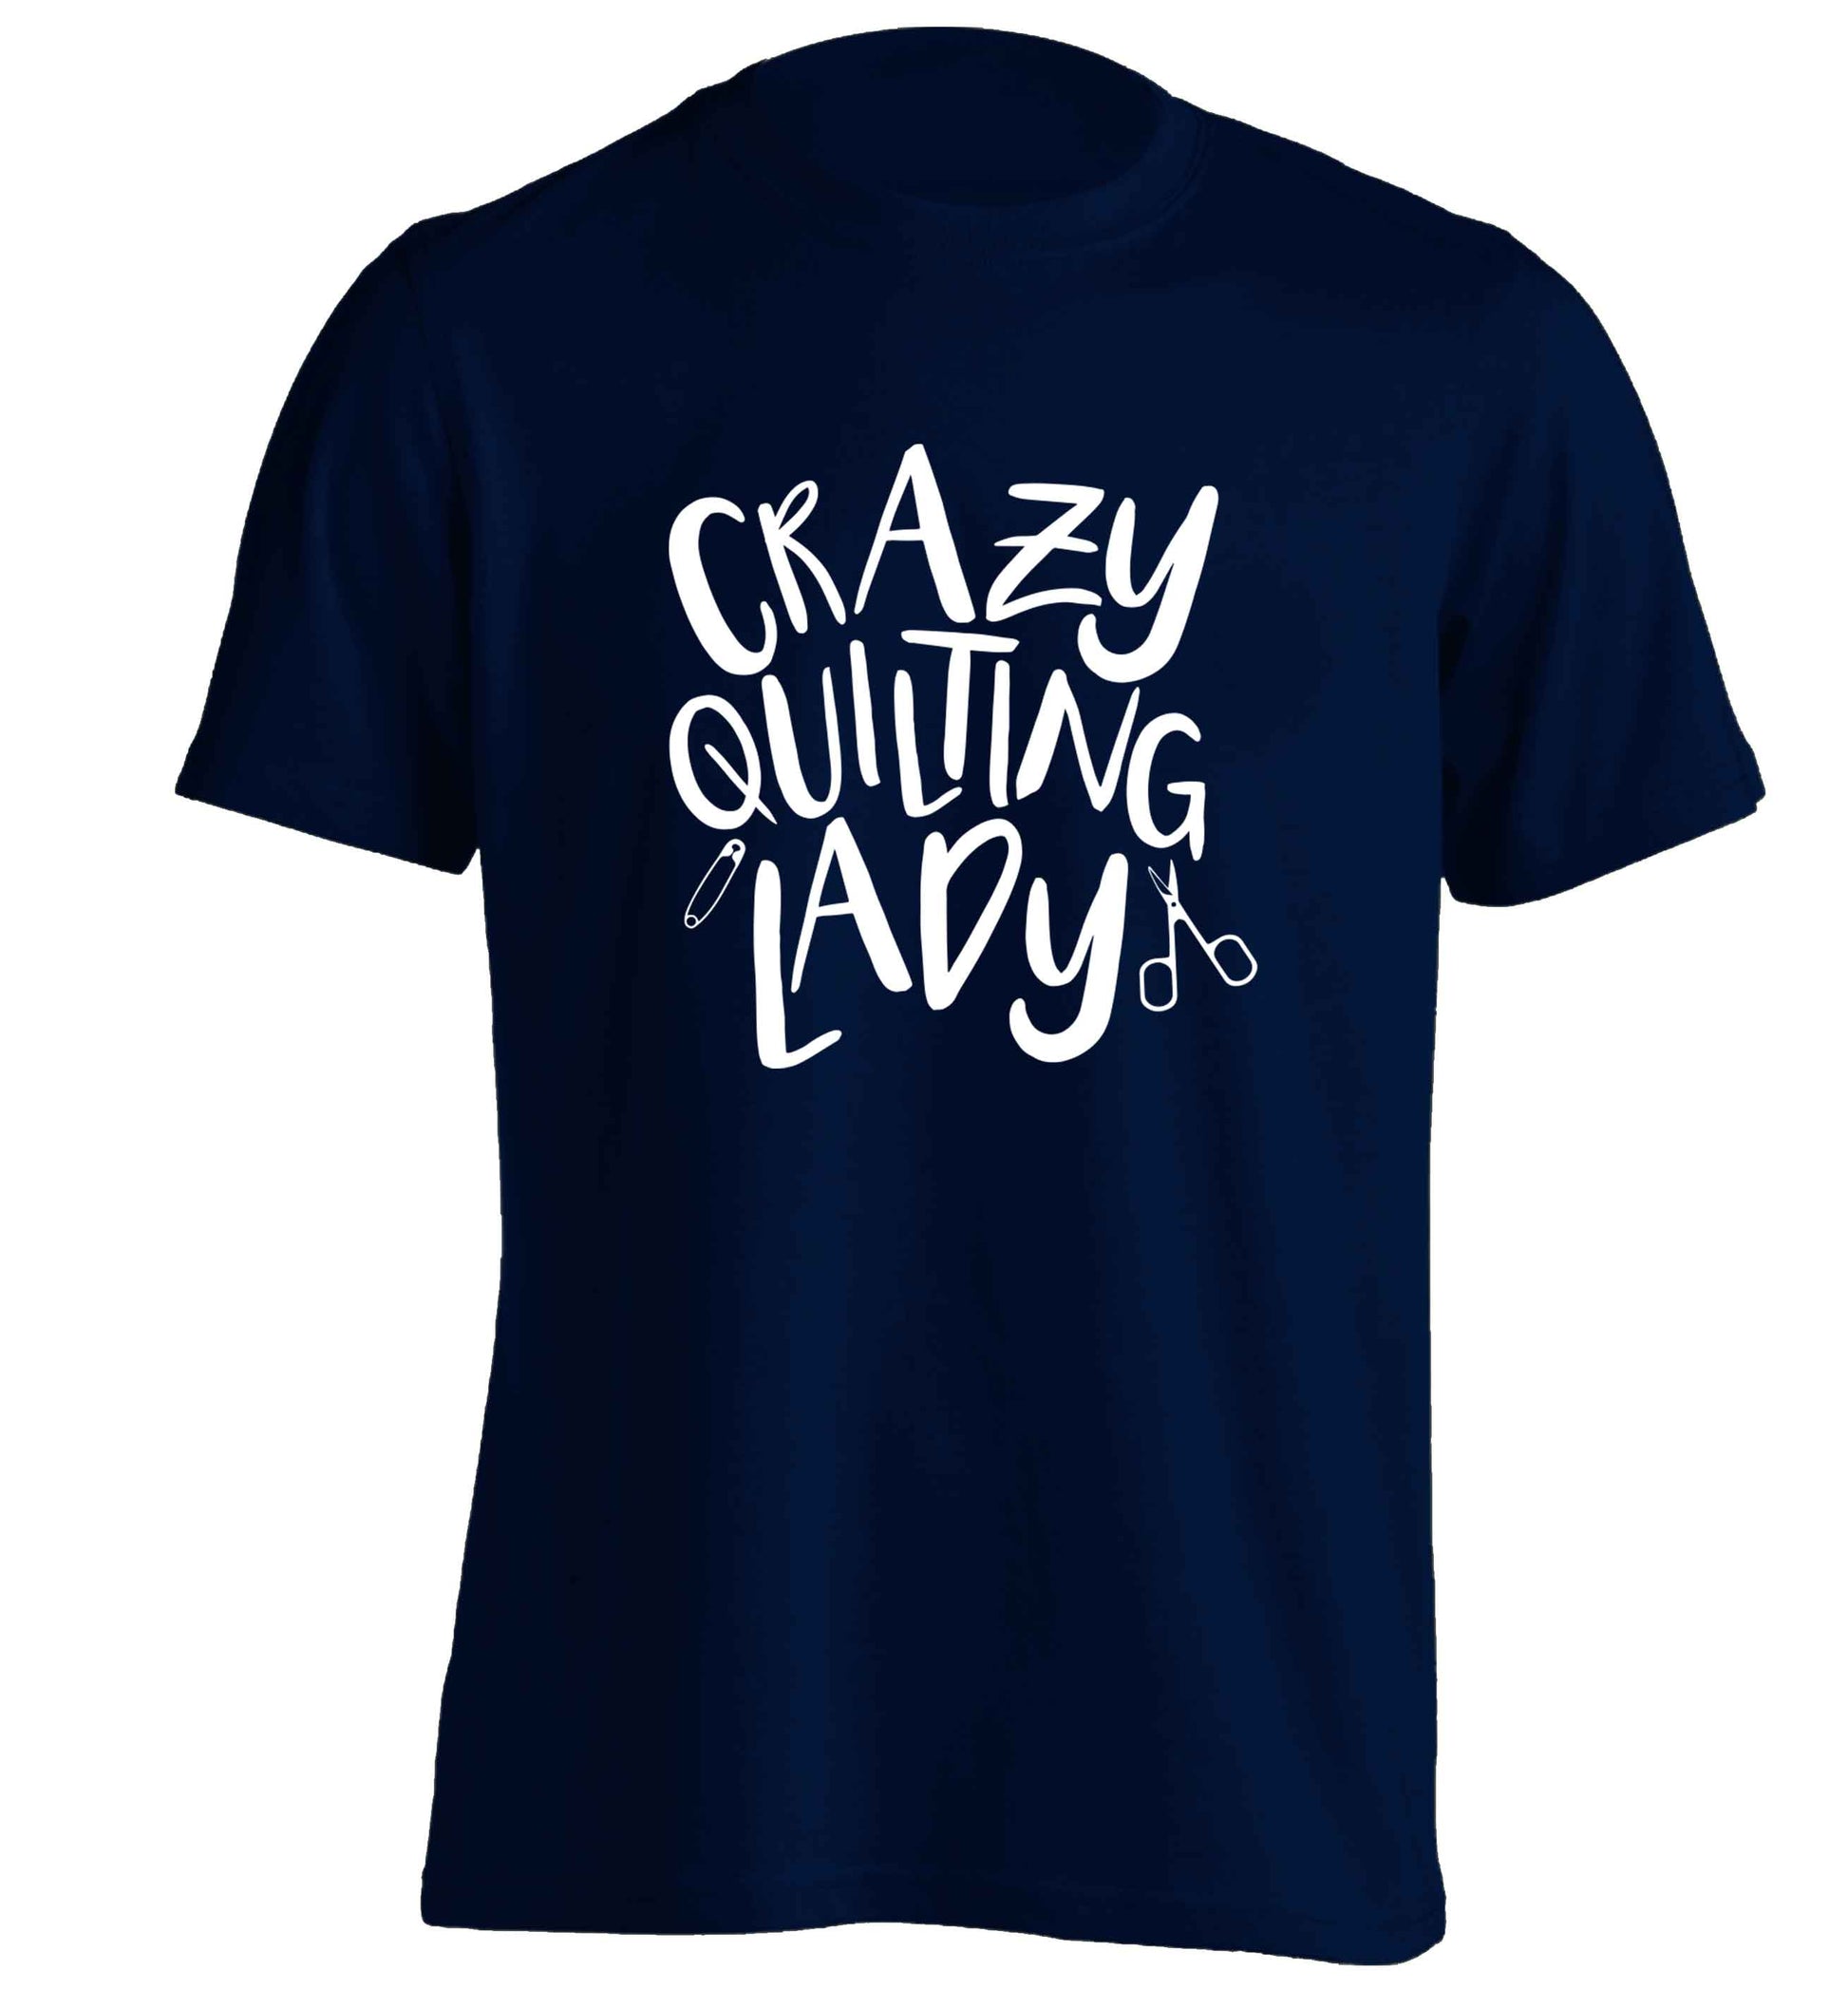 Crazy quilting lady adults unisex navy Tshirt 2XL